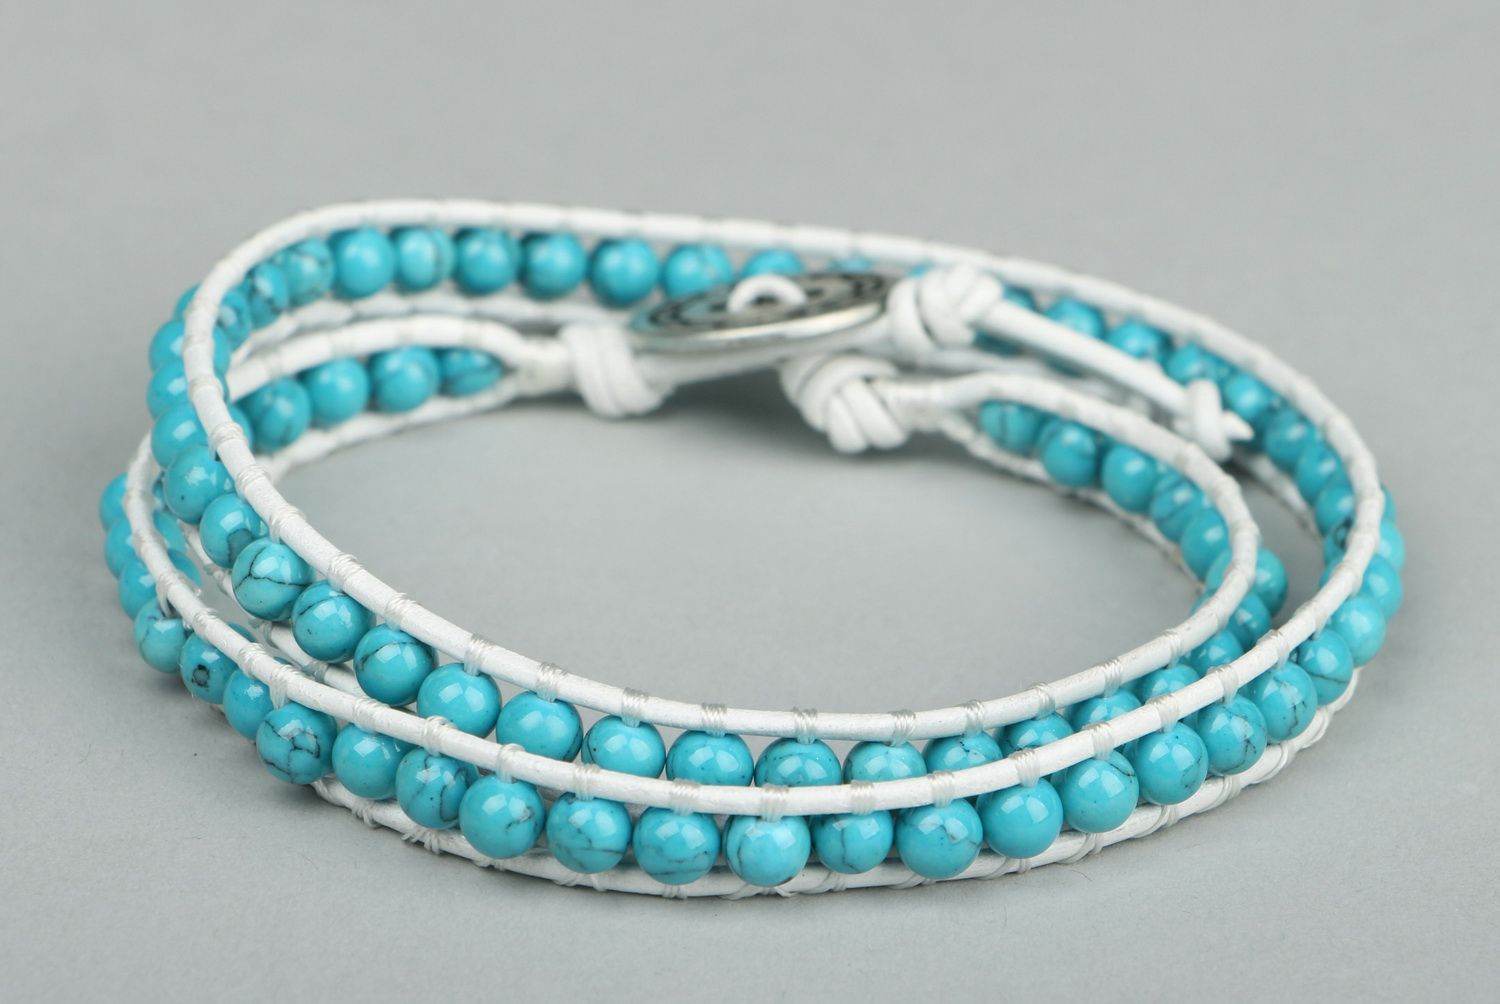 Bracelet made from turquoise stone photo 1